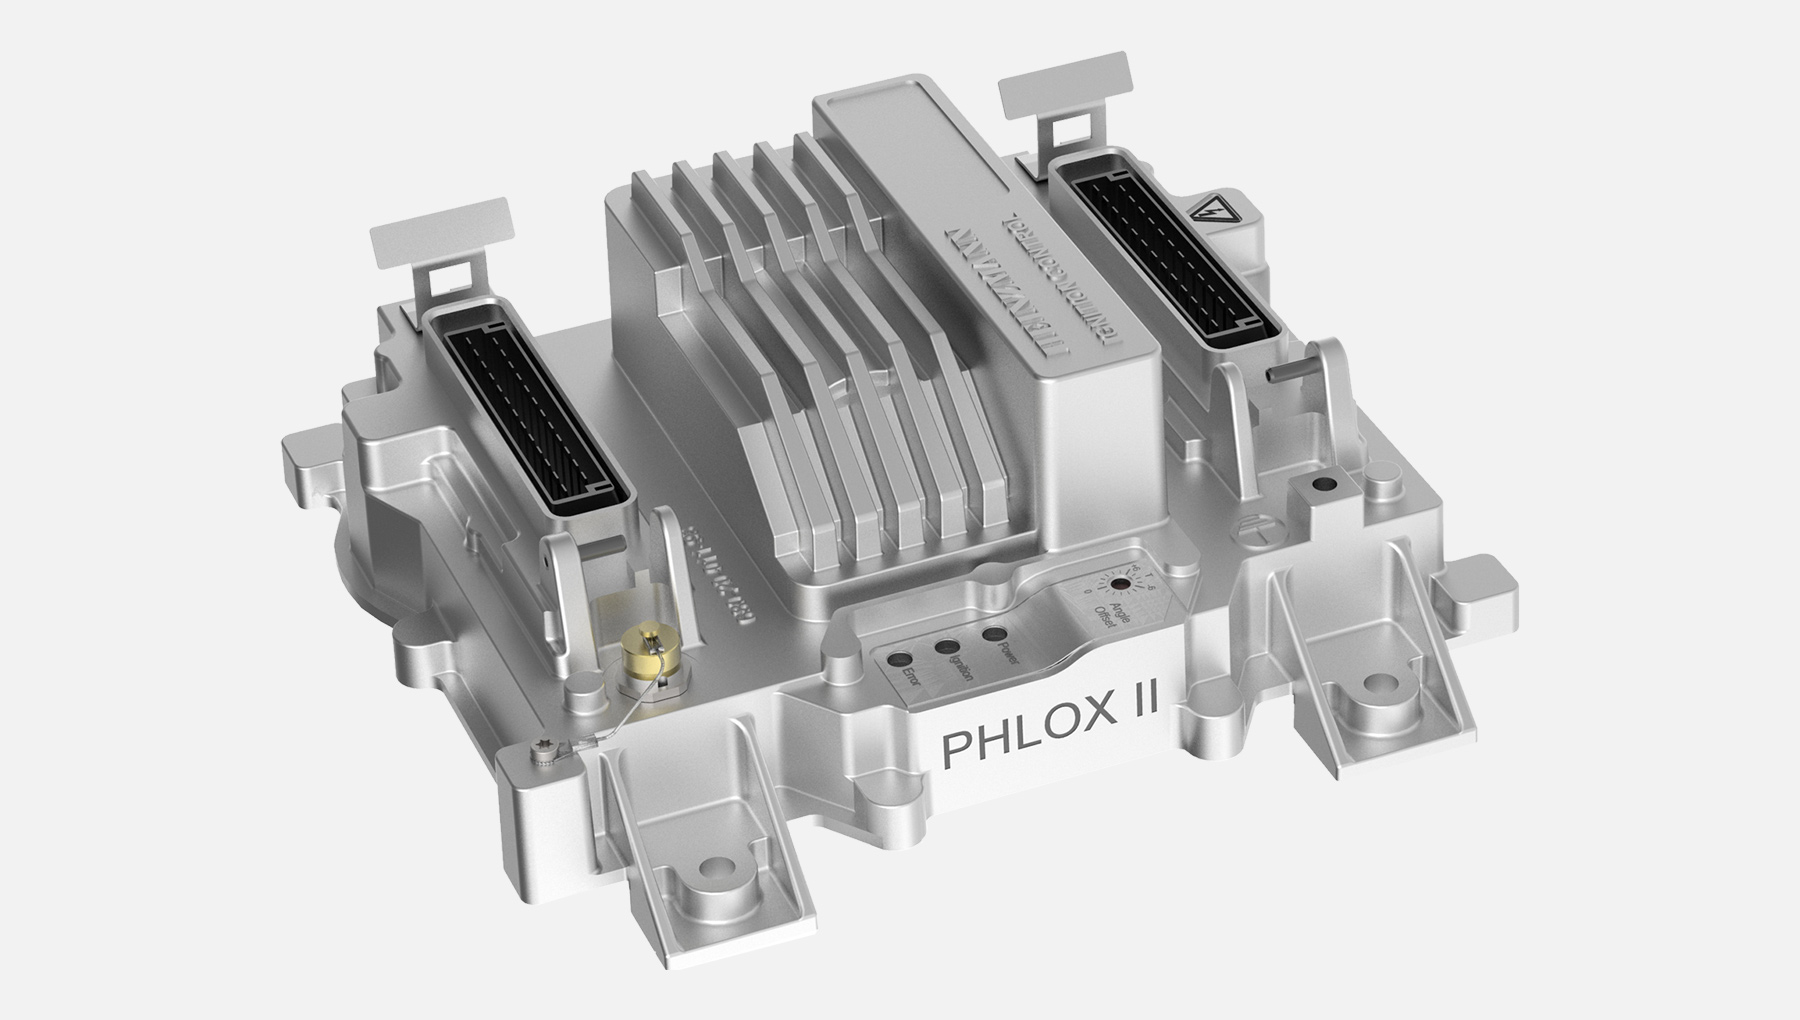 PHLOX II ignition controller